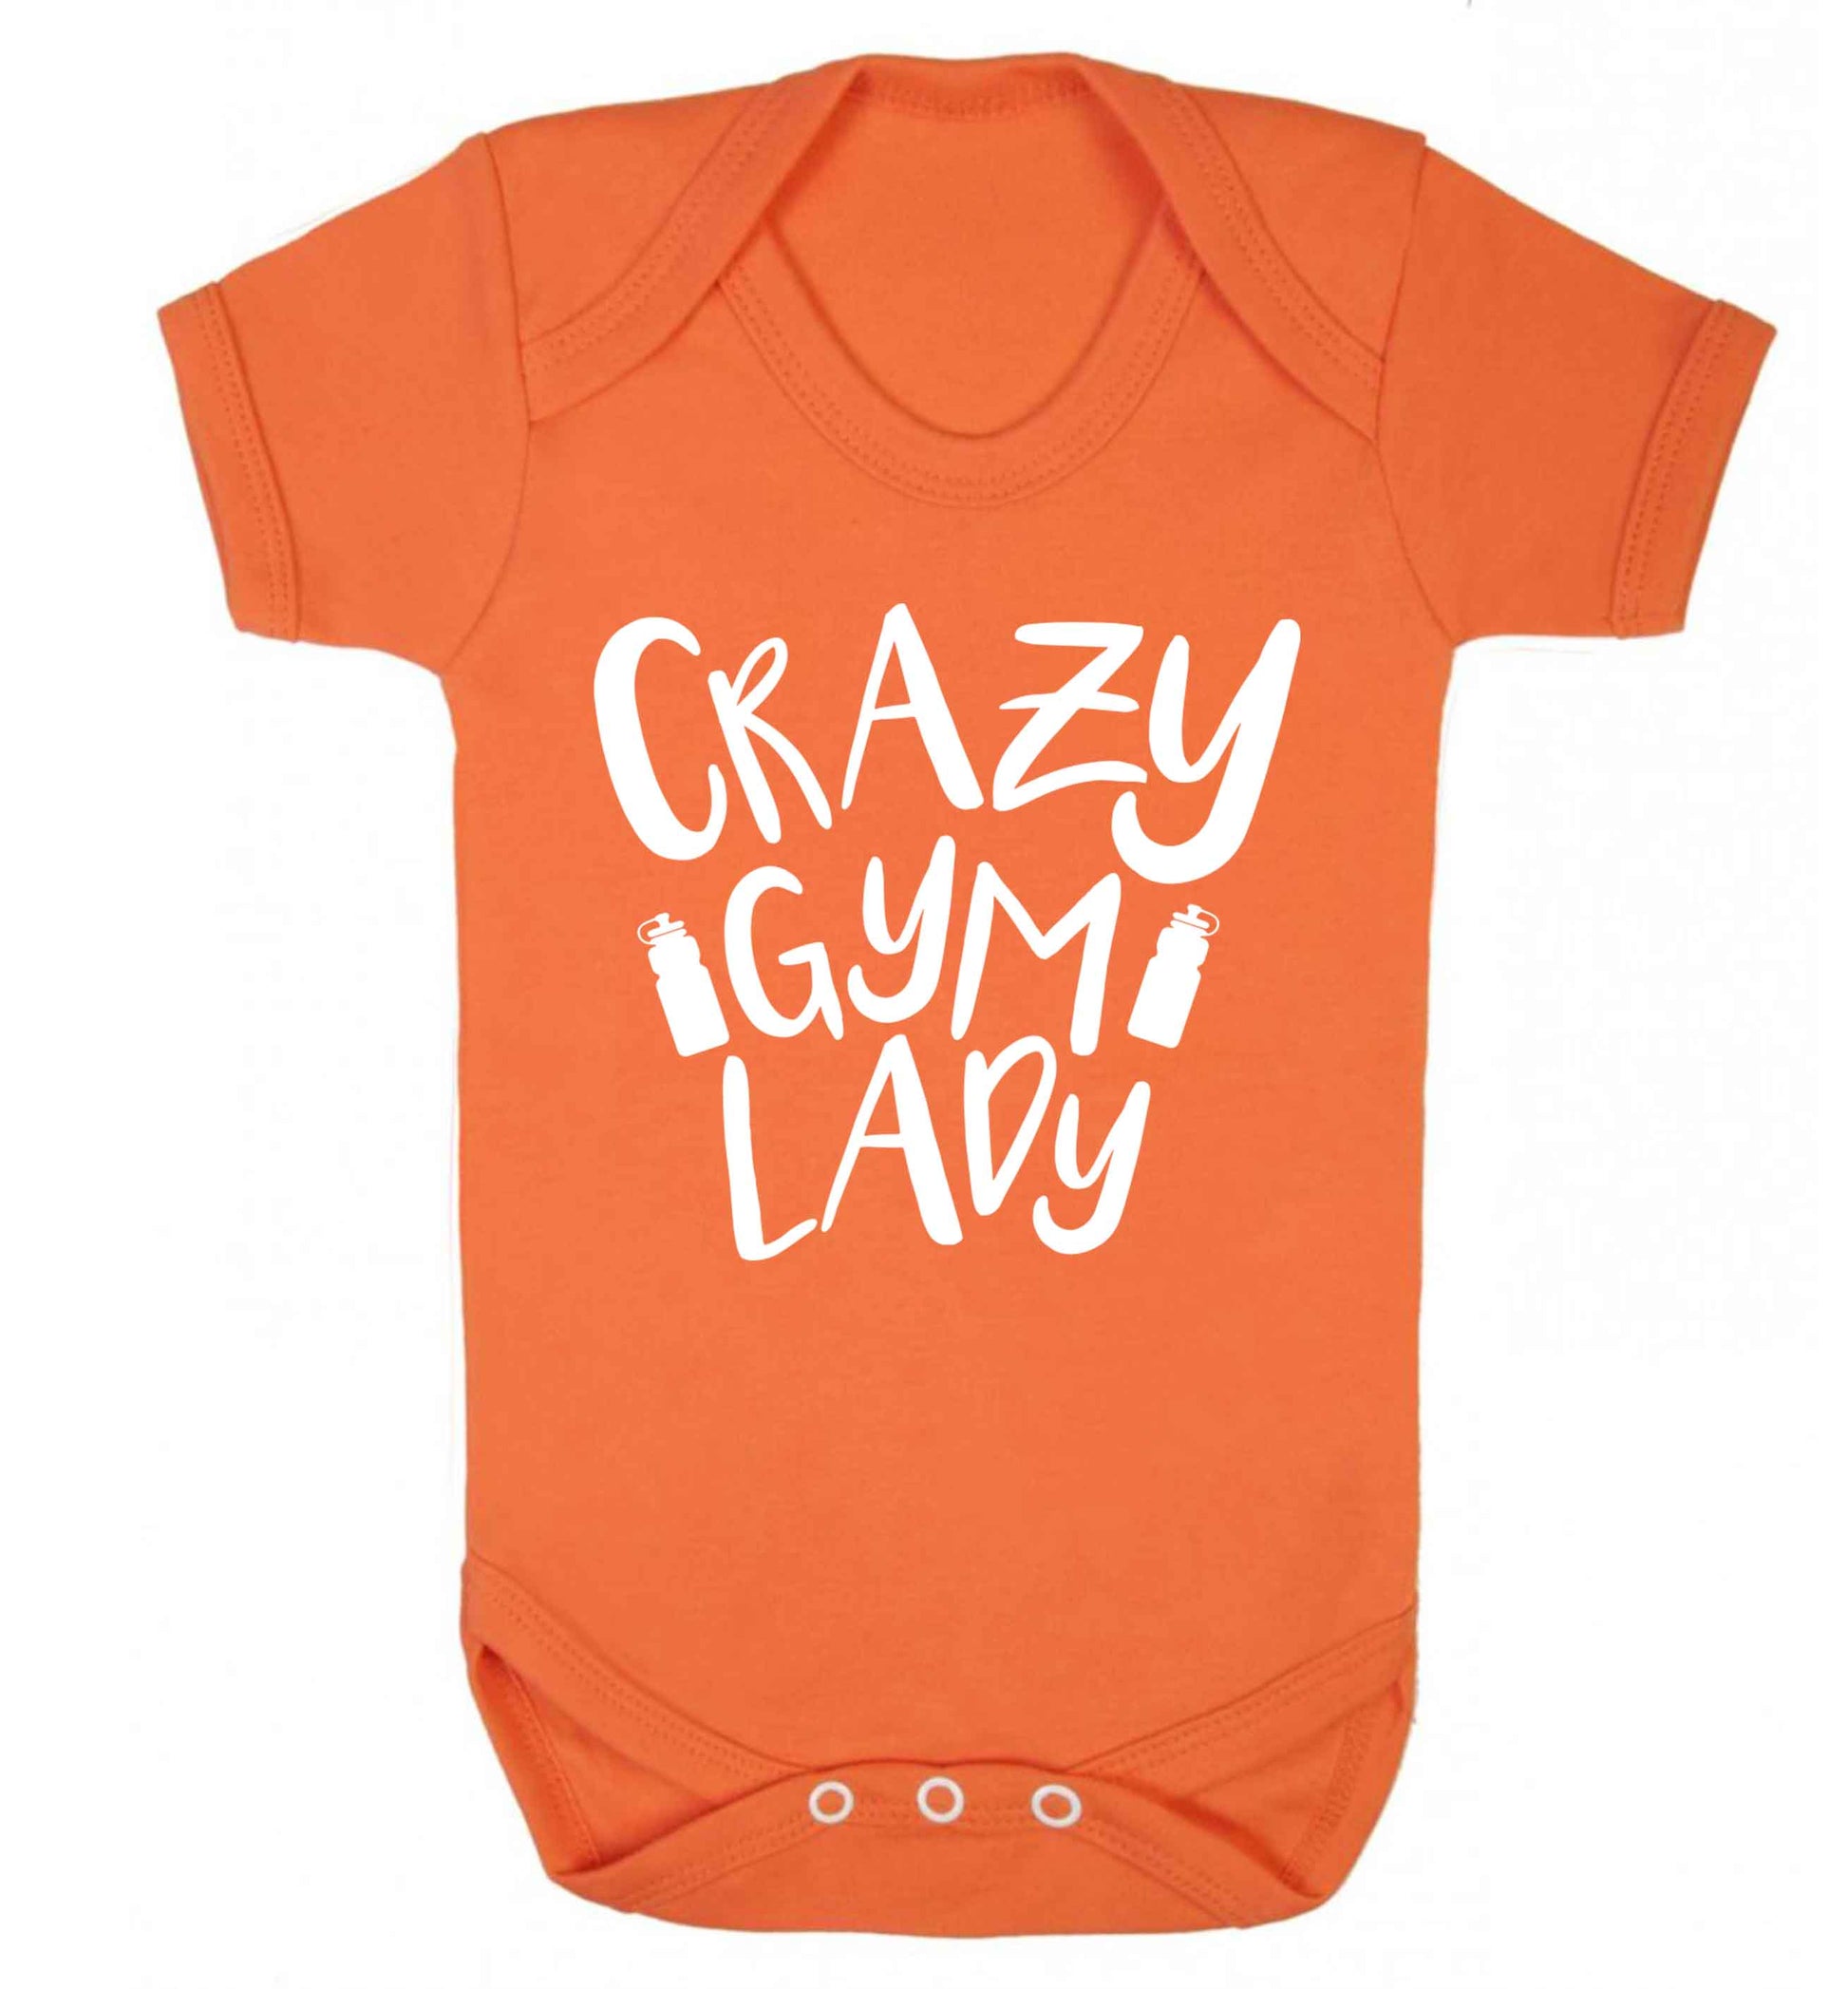 Crazy gym lady Baby Vest orange 18-24 months